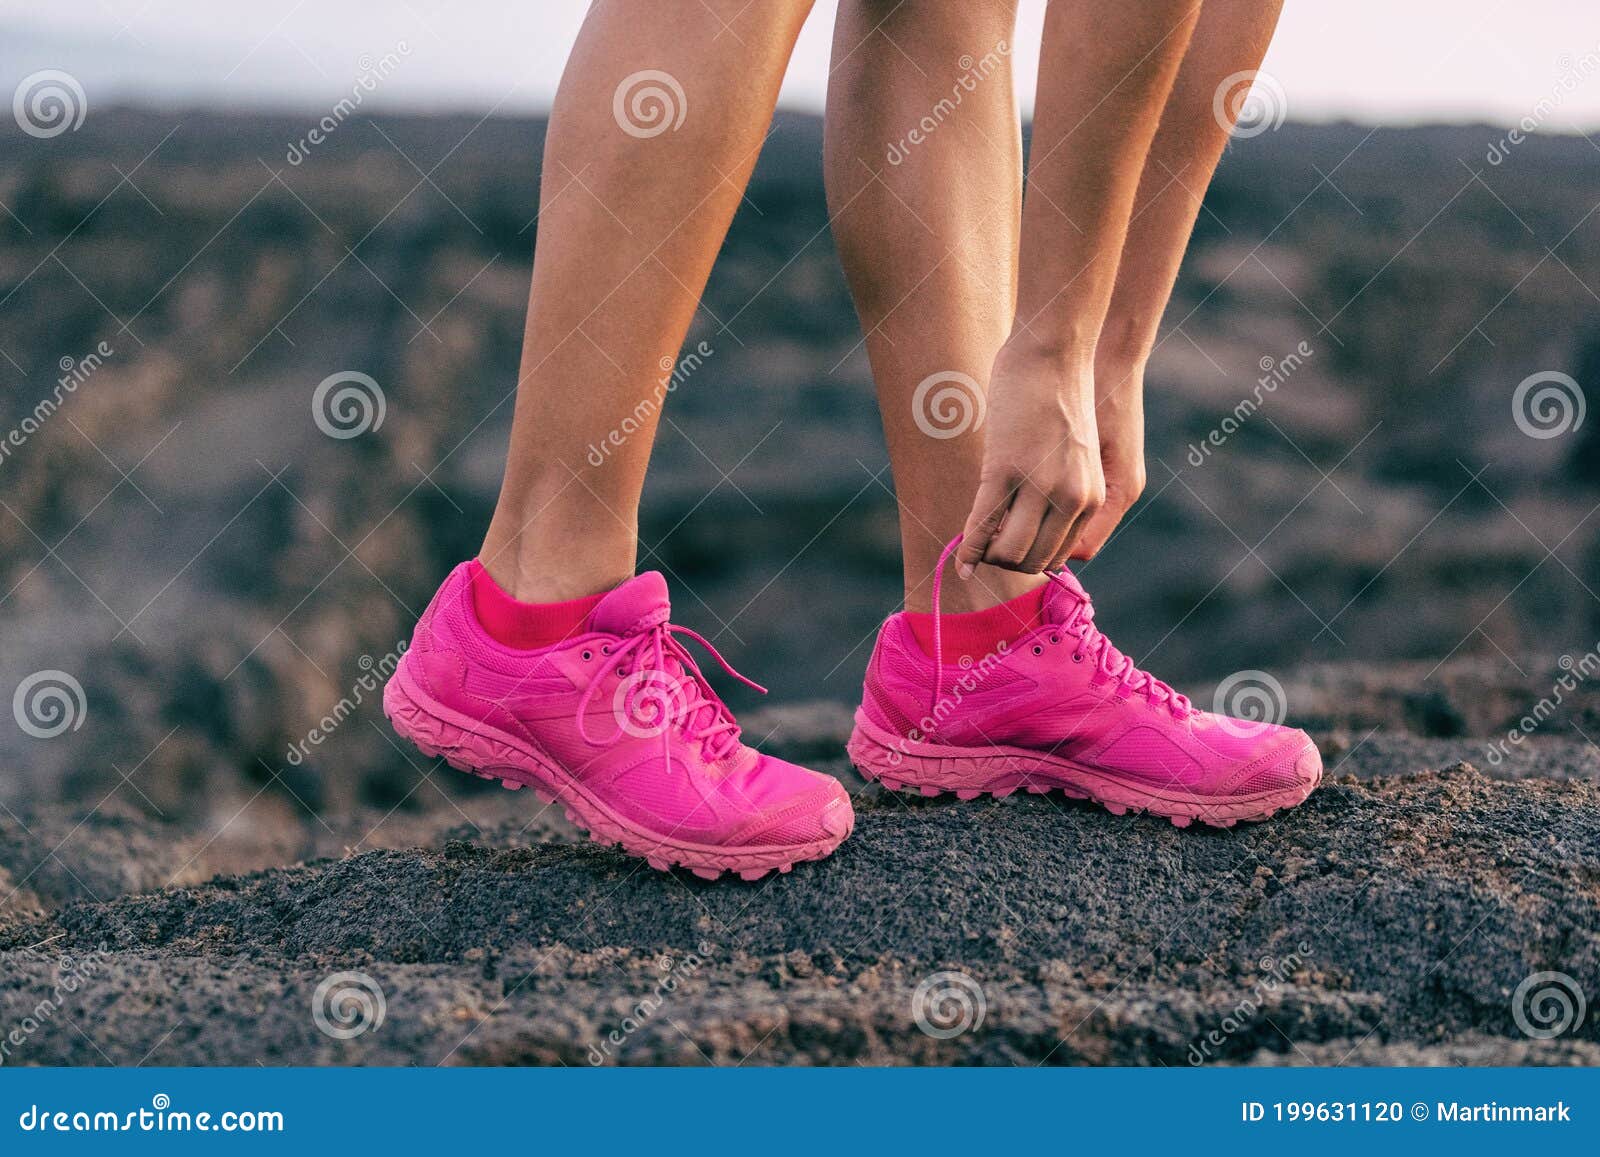 Chica Entrenamiento Se Prepara Para Caminar Sobre Rocas De Montaña Atando De Zapatos Correr - Calzado De Moda Foto de archivo - Imagen de senderismo, calcetines: 199631120